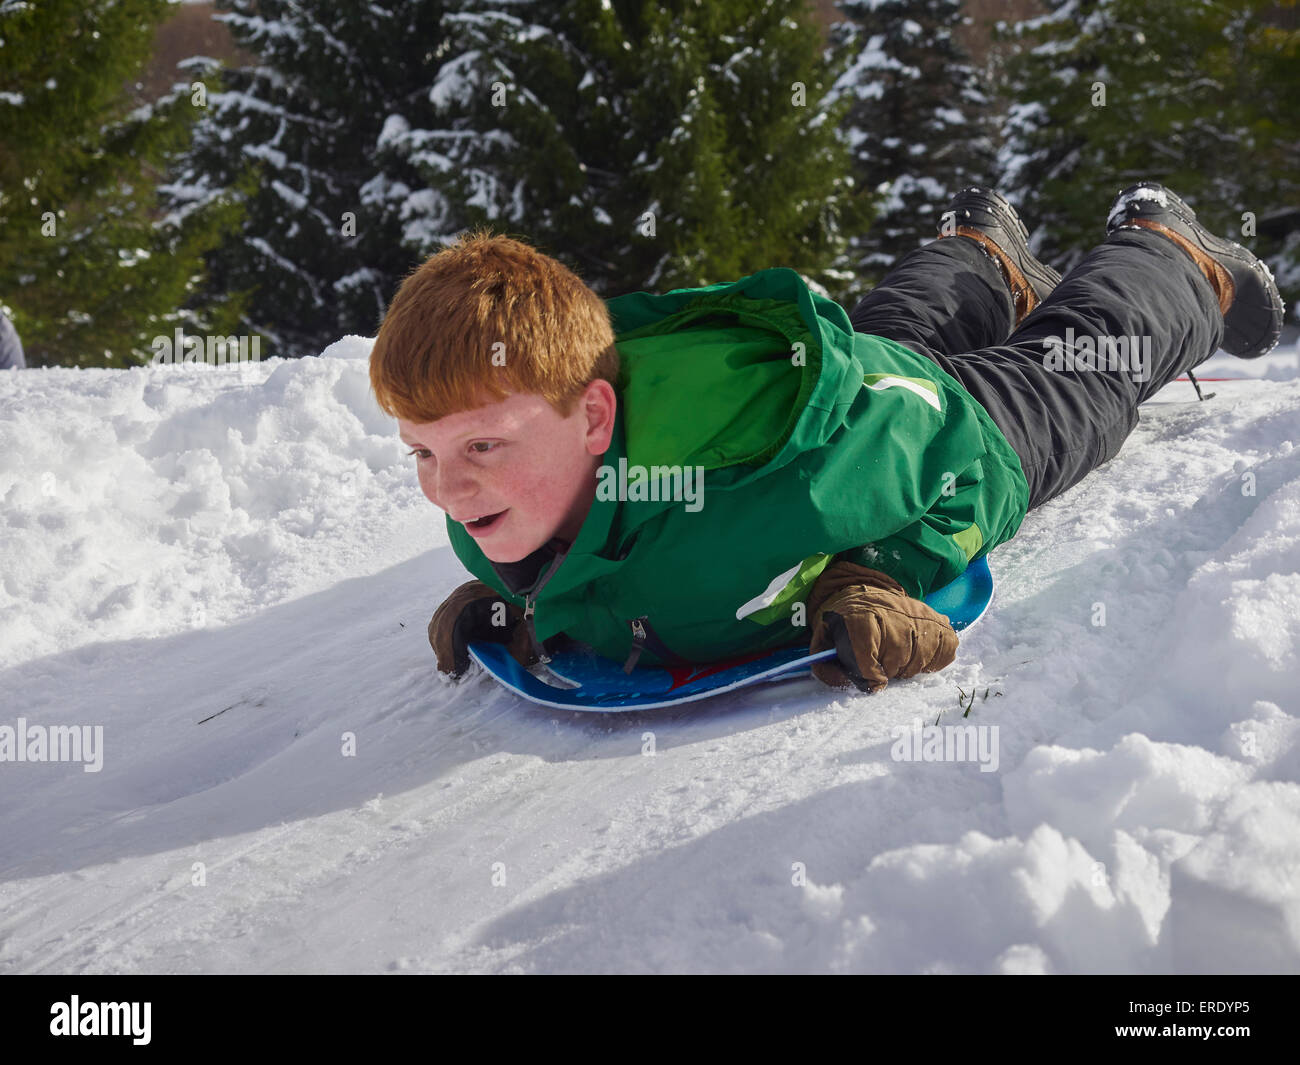 Caucasian boy sledding on snowy hill Stock Photo